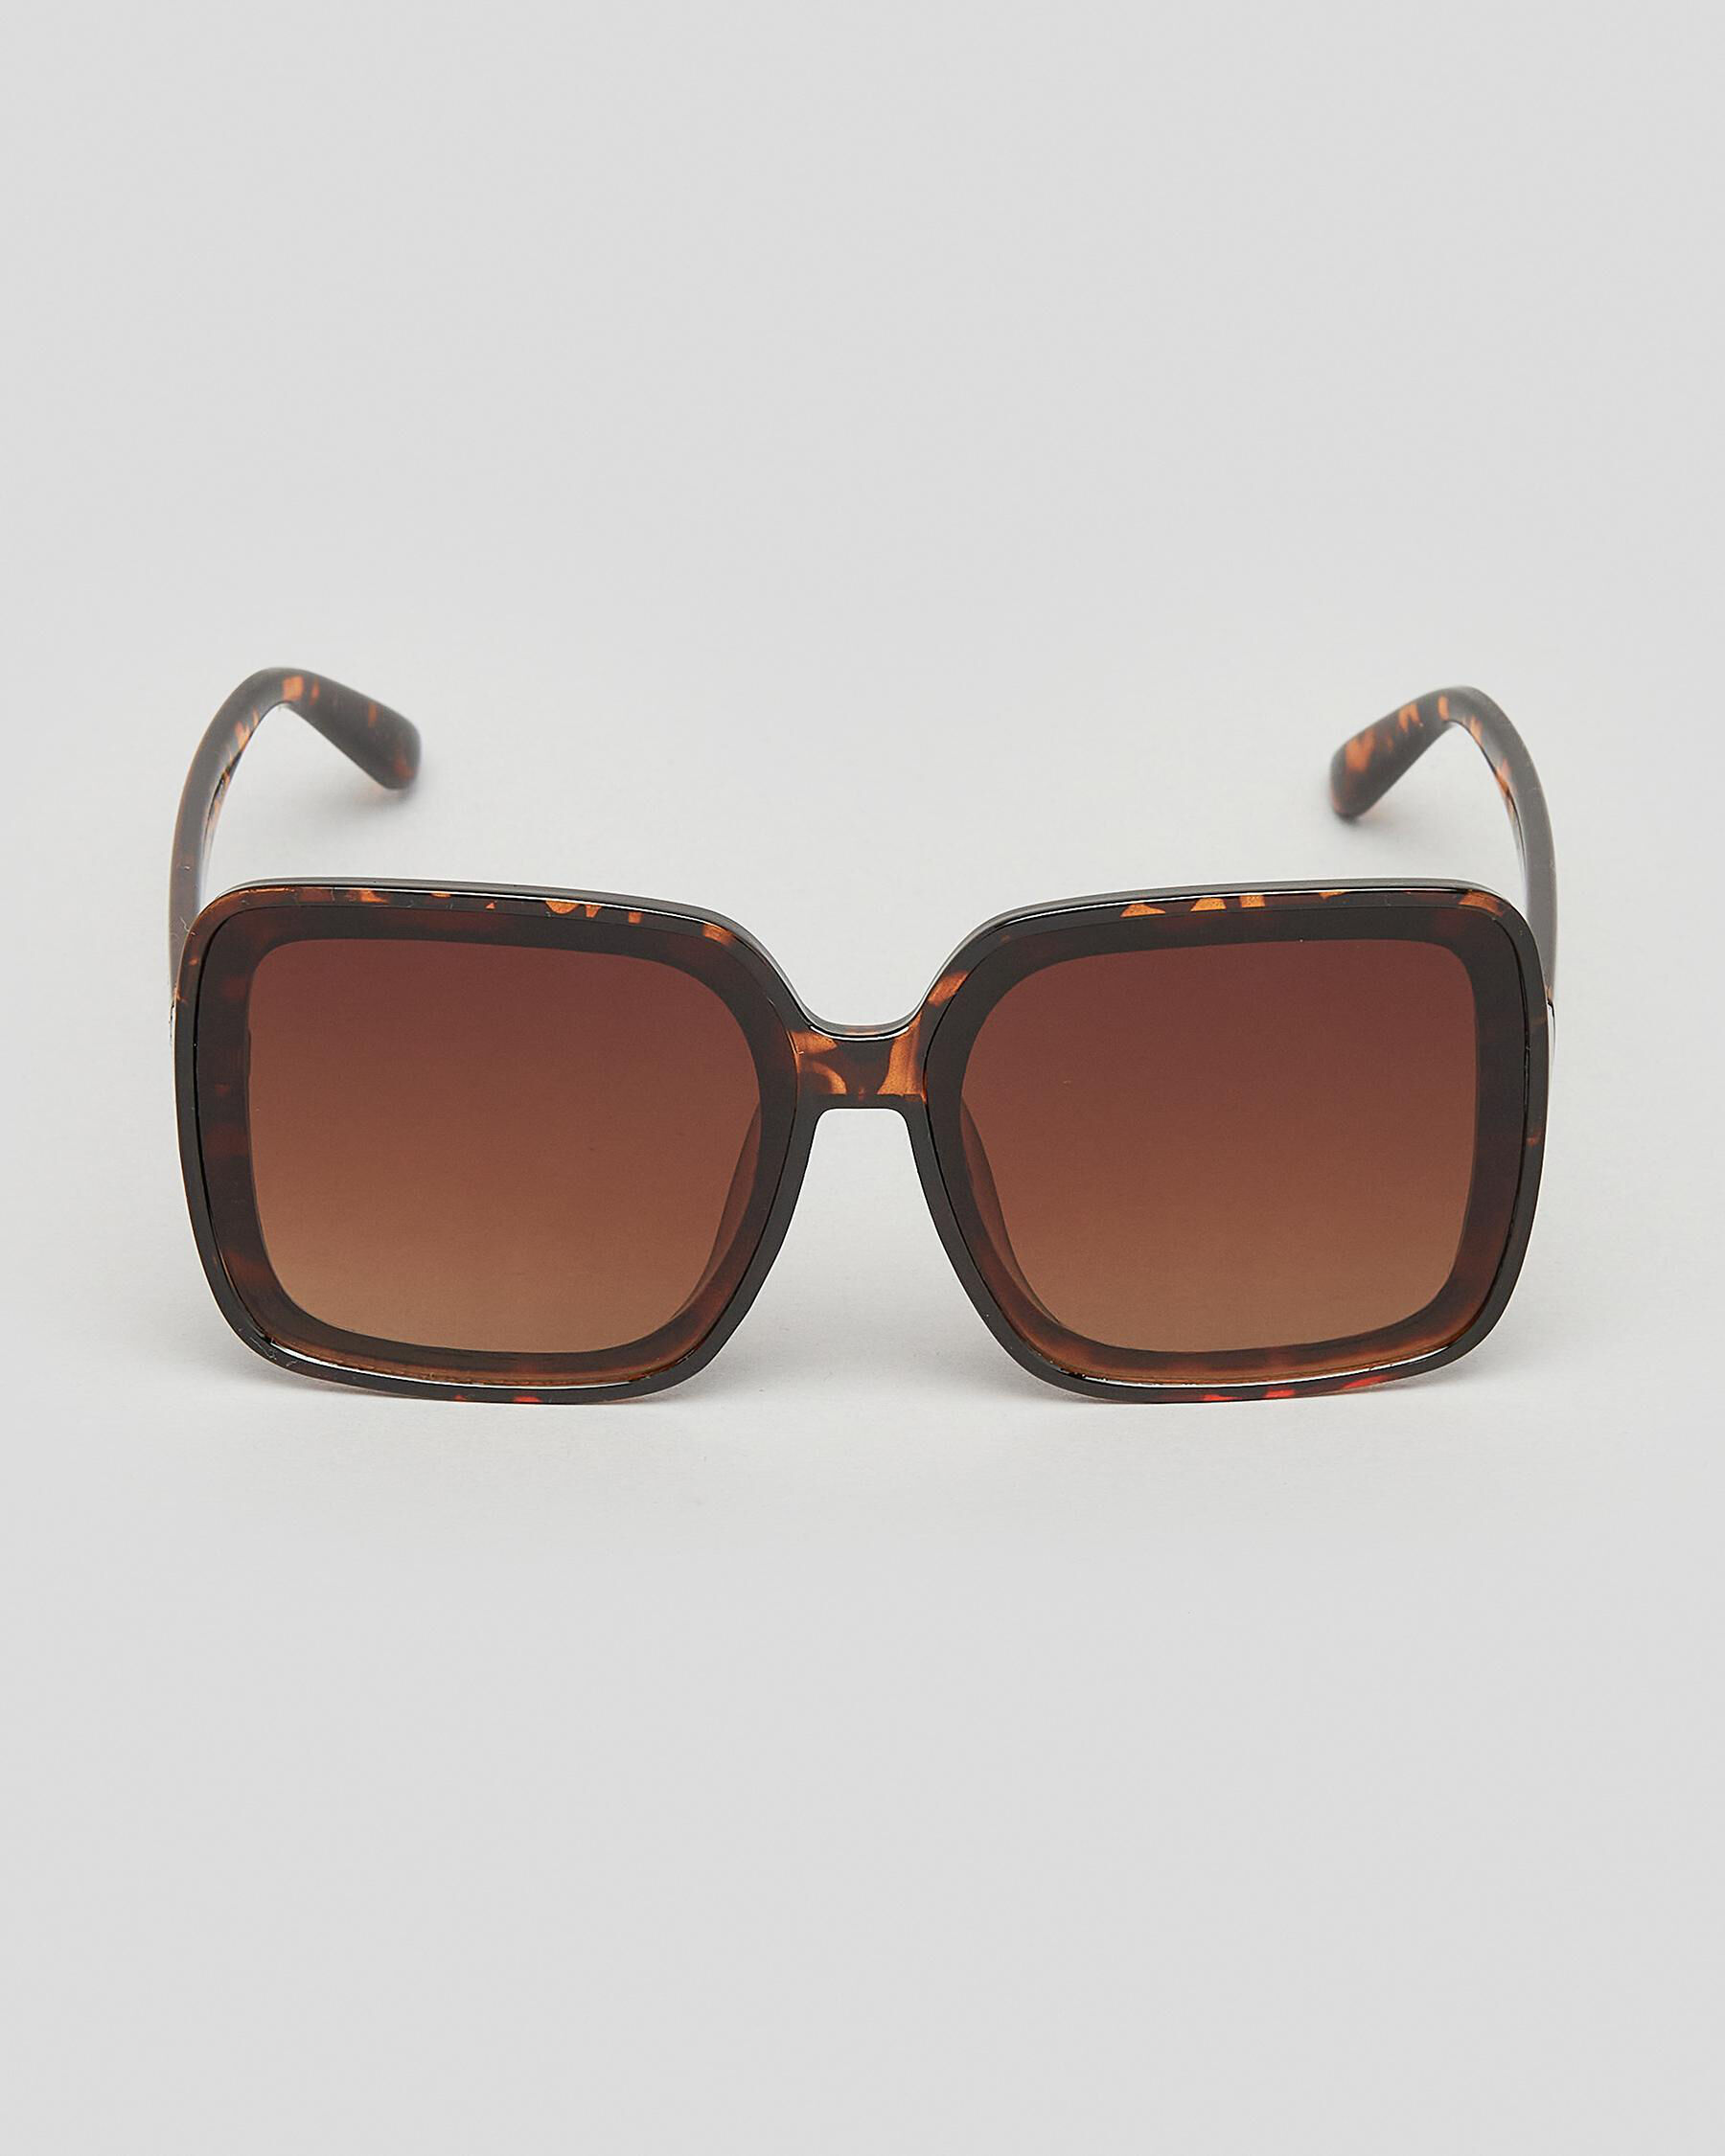 2023 best sale - Indie Eyewear Original St Barts Sunglasses at discount ...